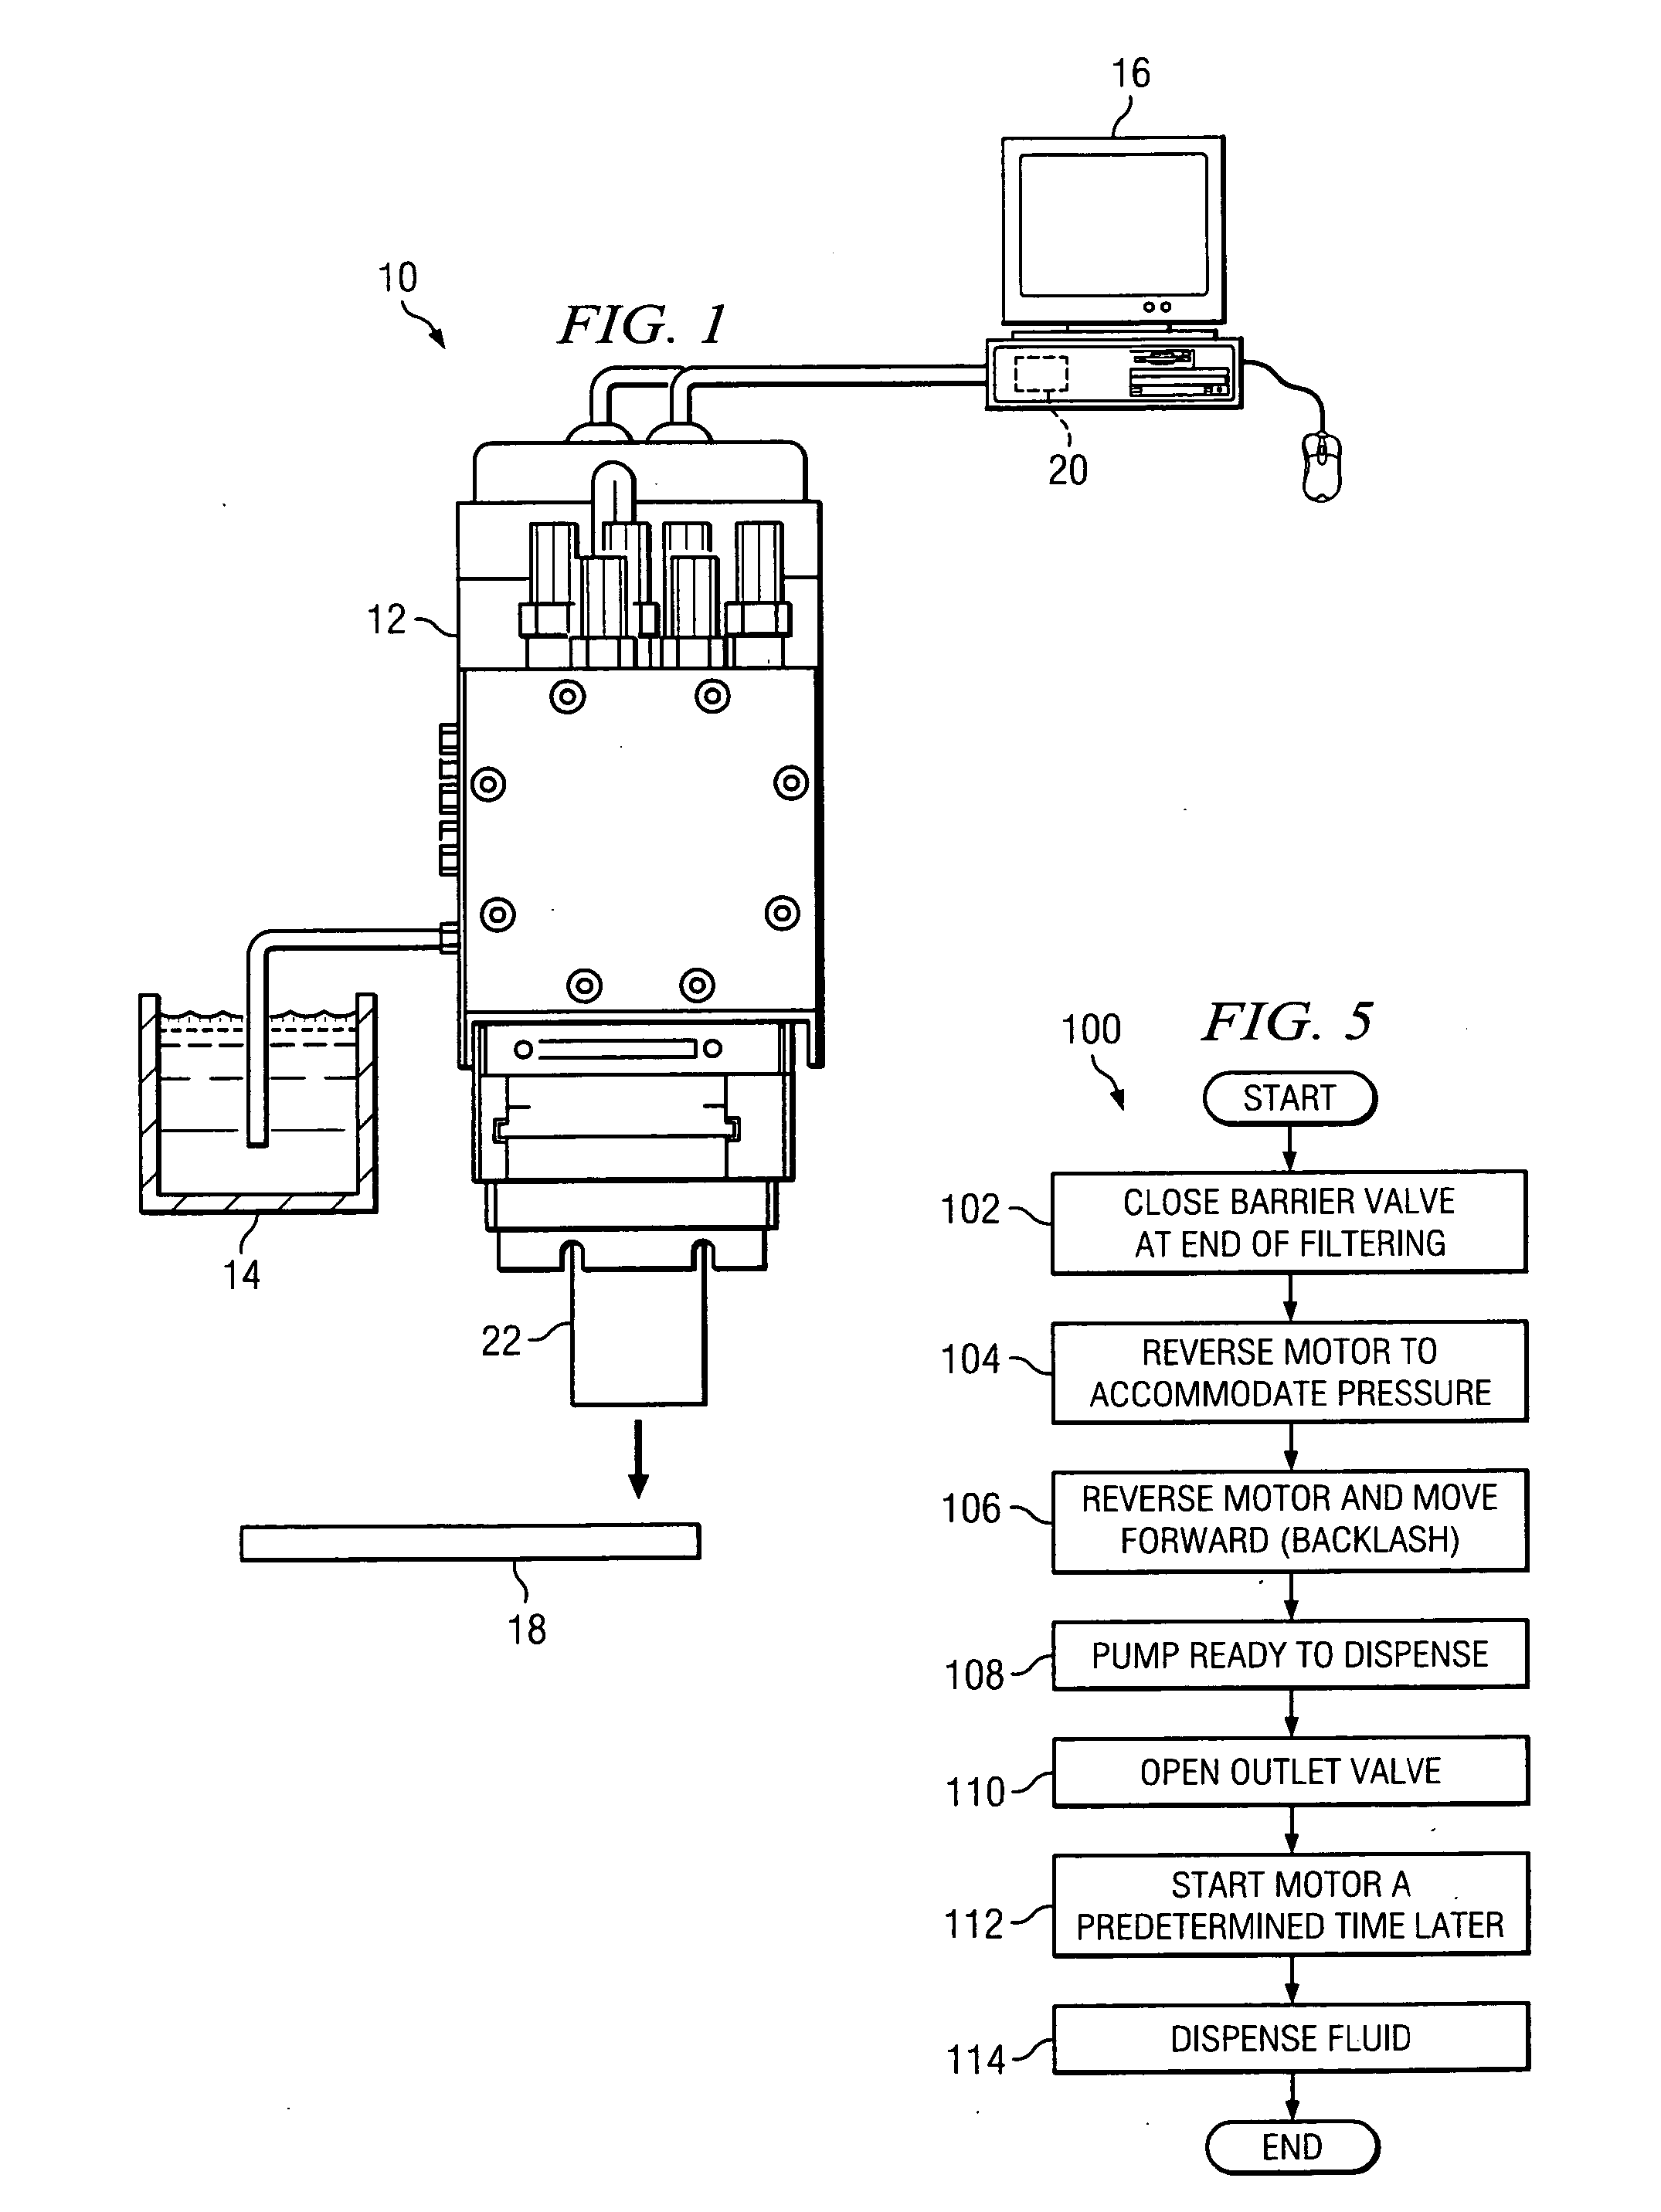 Pump controller for precision pumping apparatus